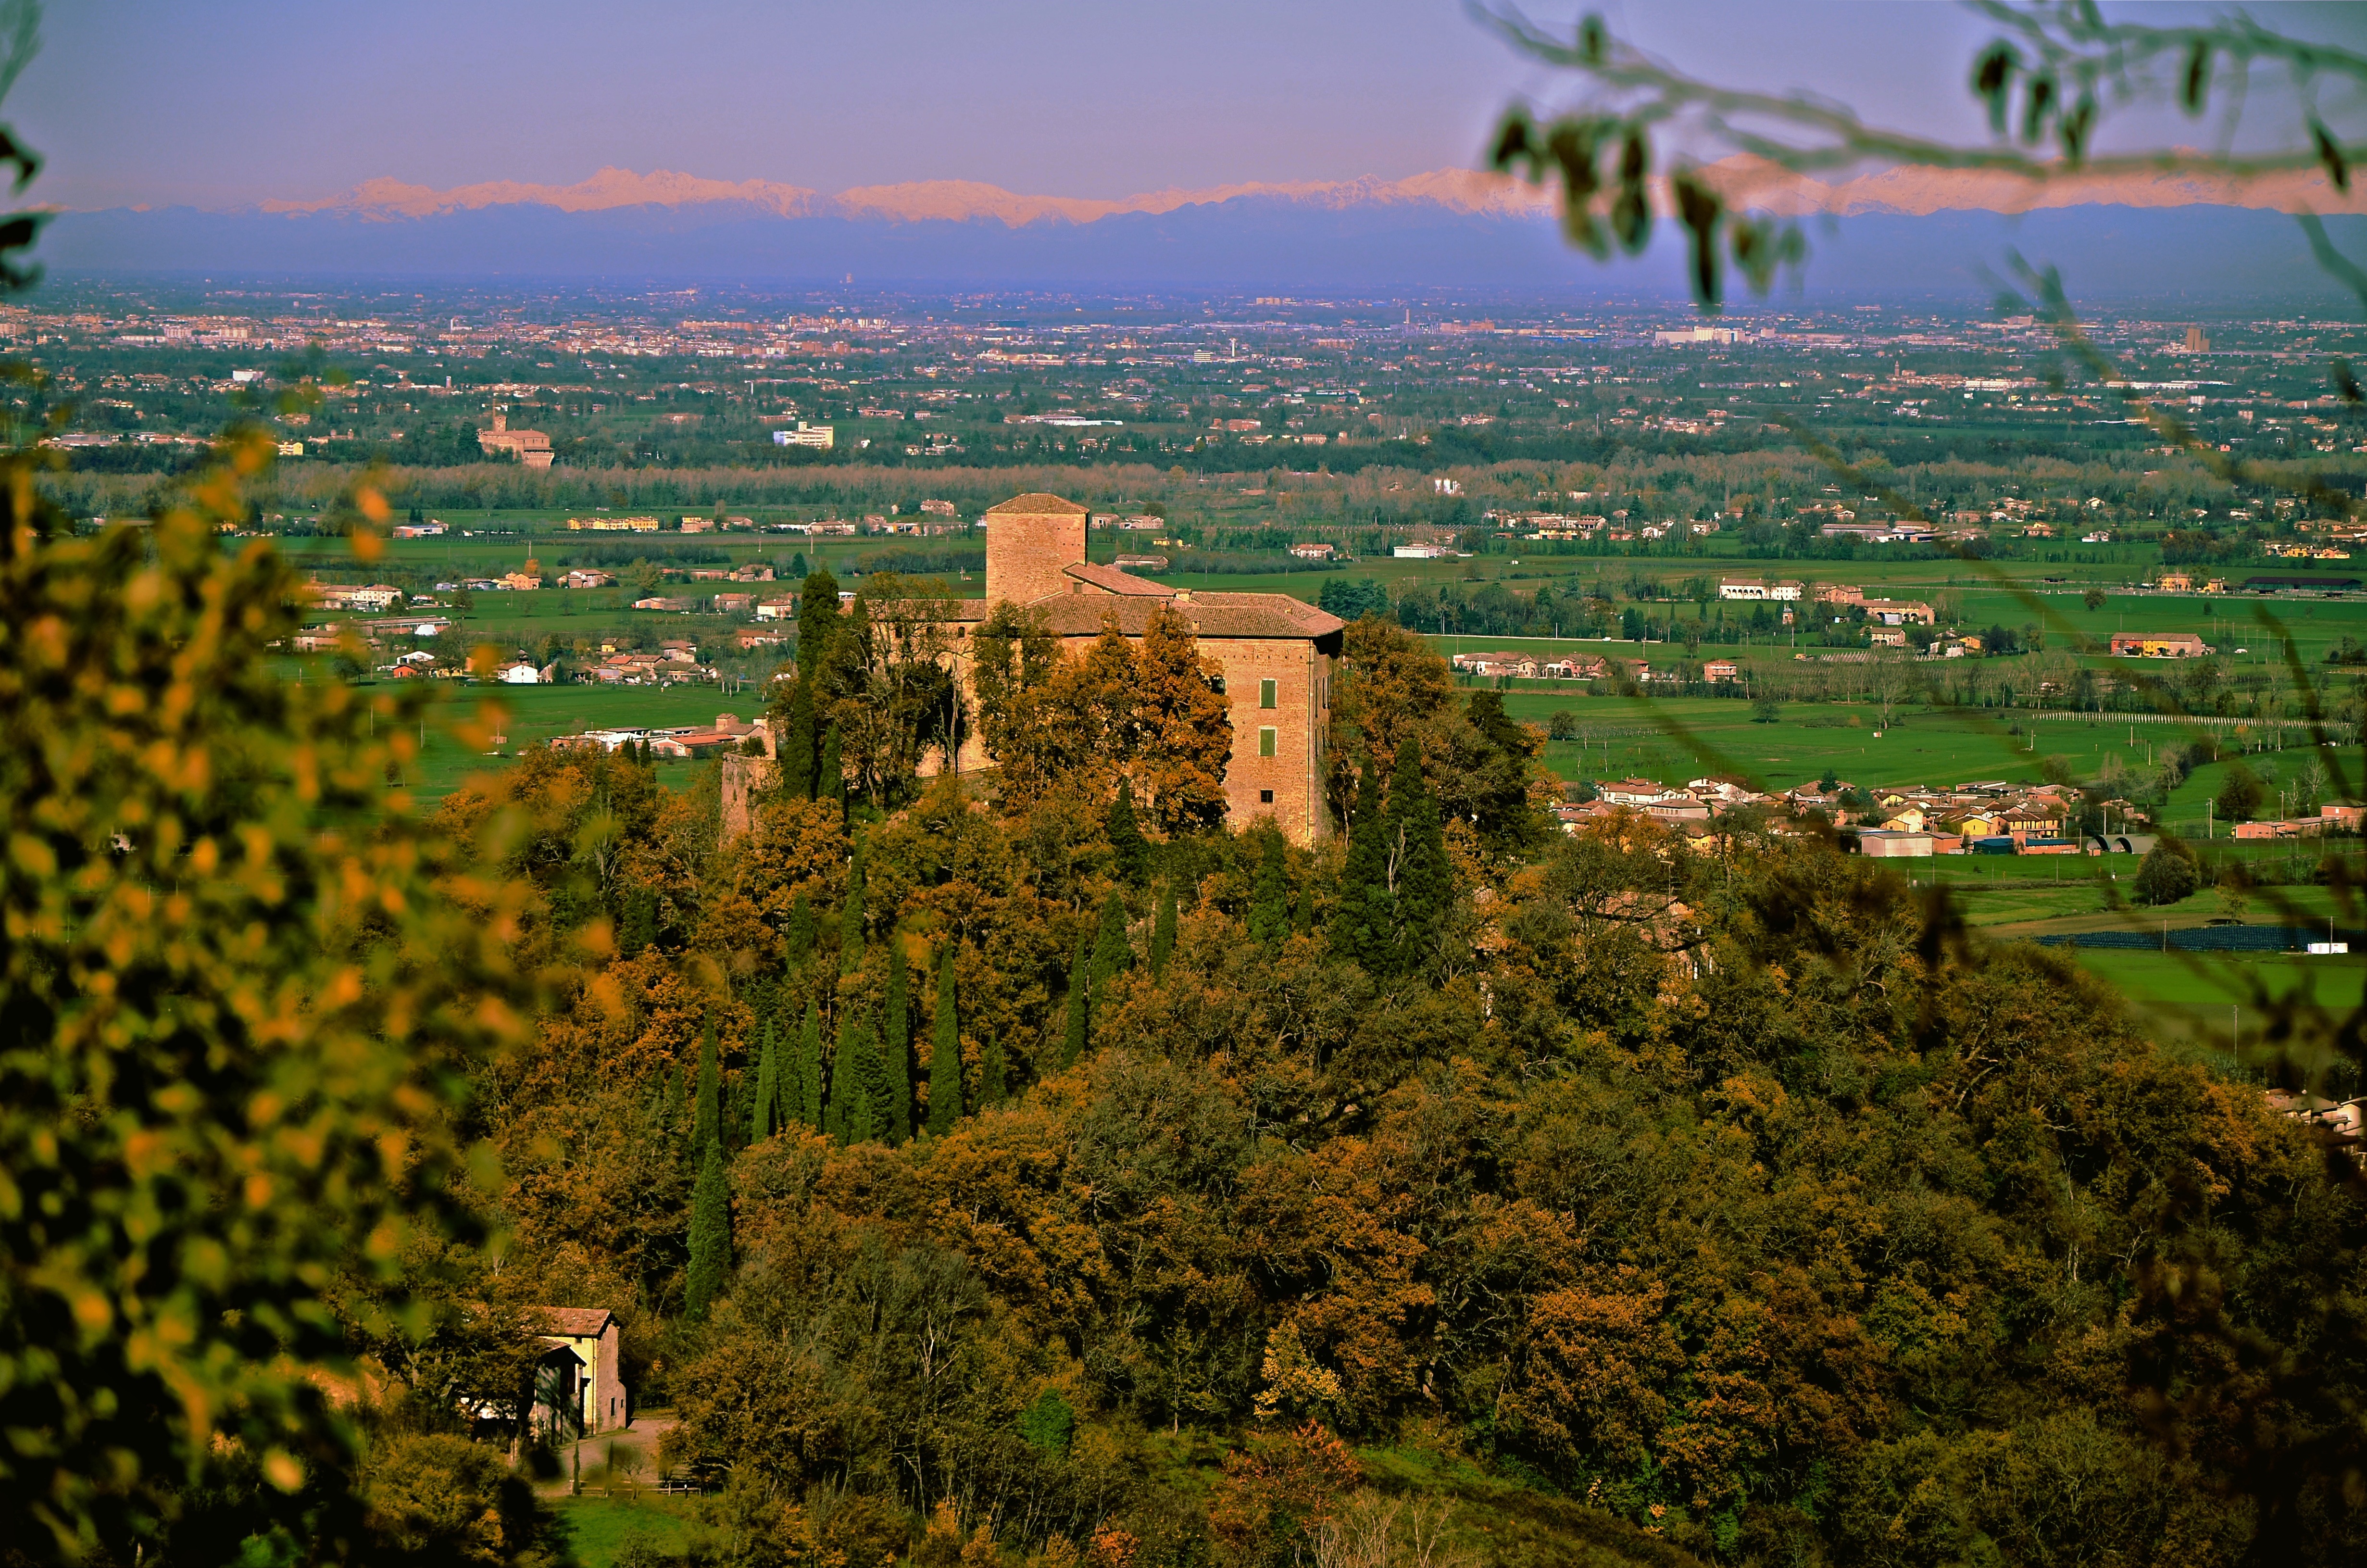 foto: https://upload.wikimedia.org/wikipedia/commons/5/59/Vista_Pianura_padana_dal_Castello_di_Bianello.jpg